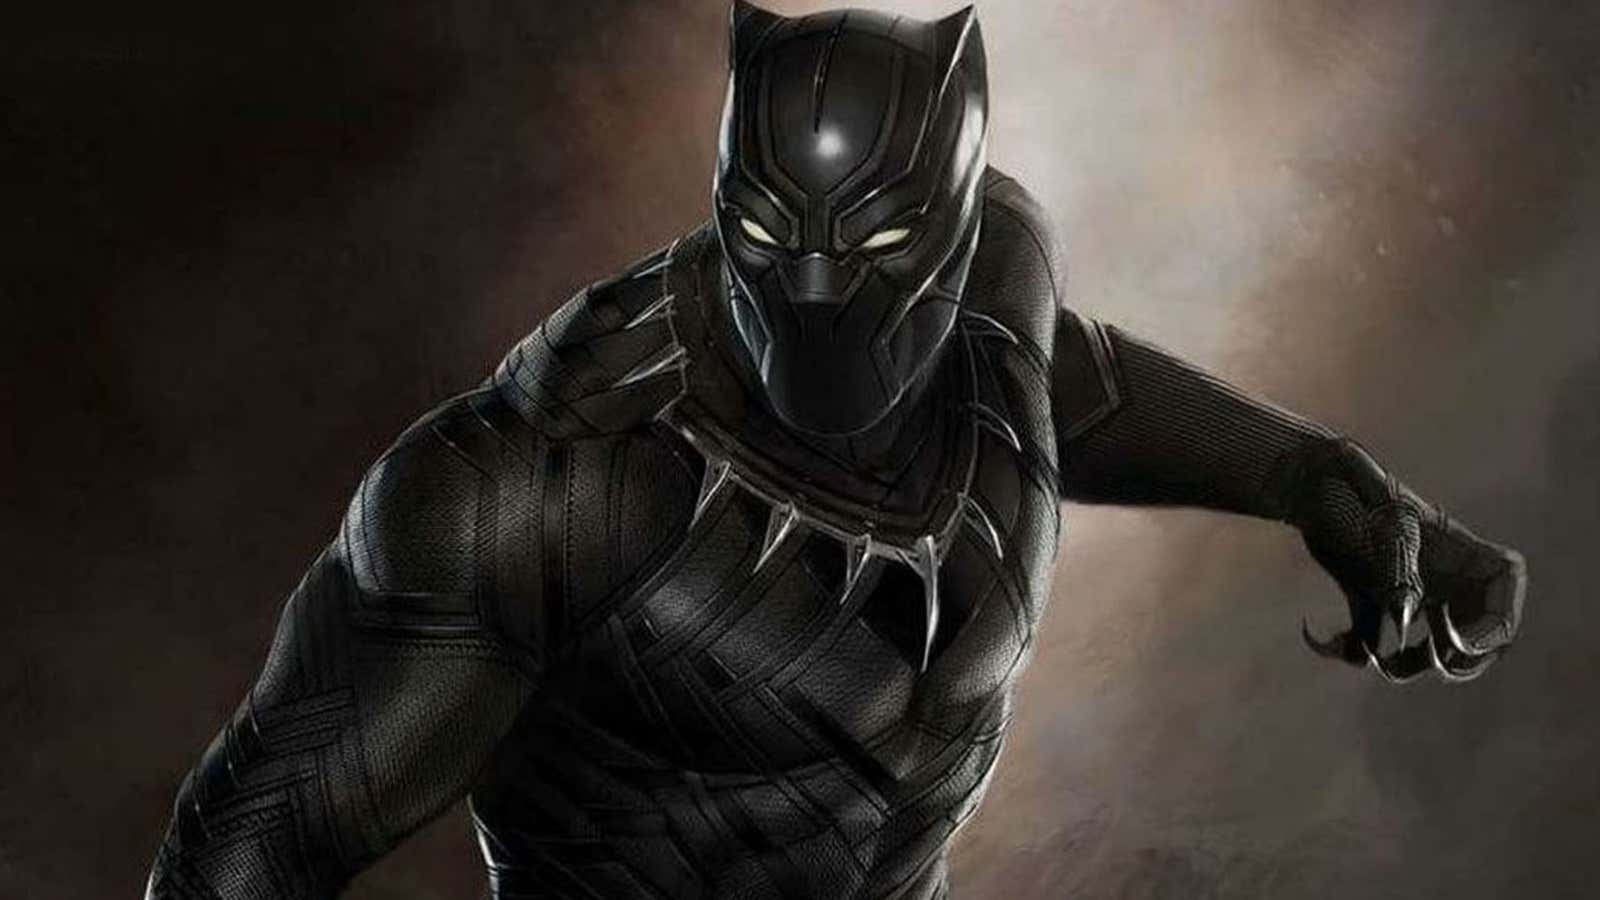 Black Panther's' Wakanda sheds light on black excellence